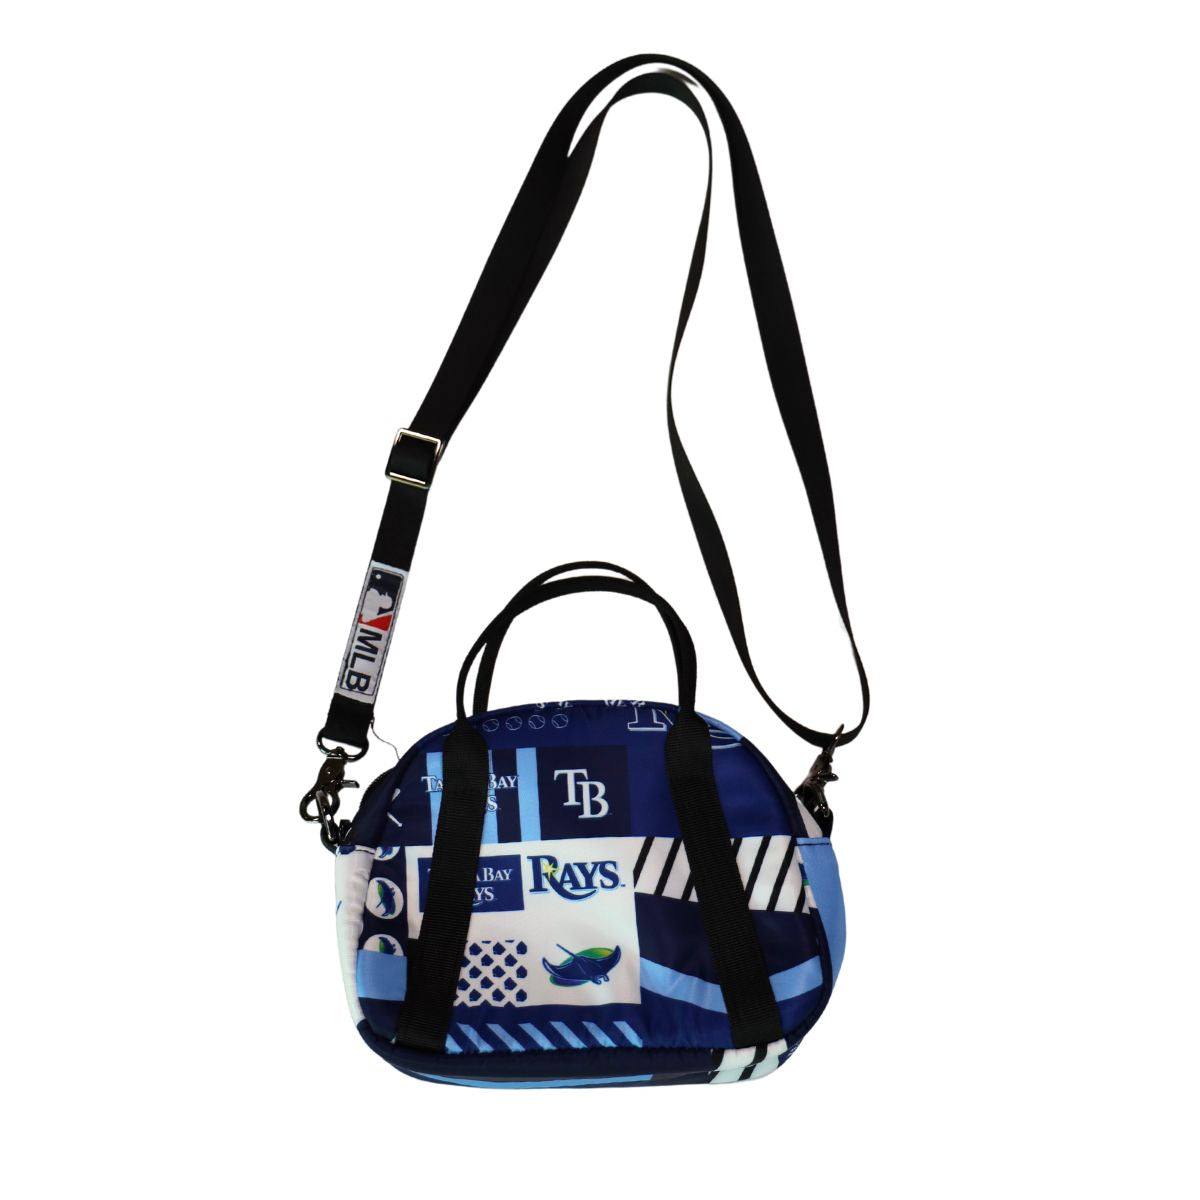 St Johns Bay Blue & Beige Handbag Purse with Matching Change Purse | eBay